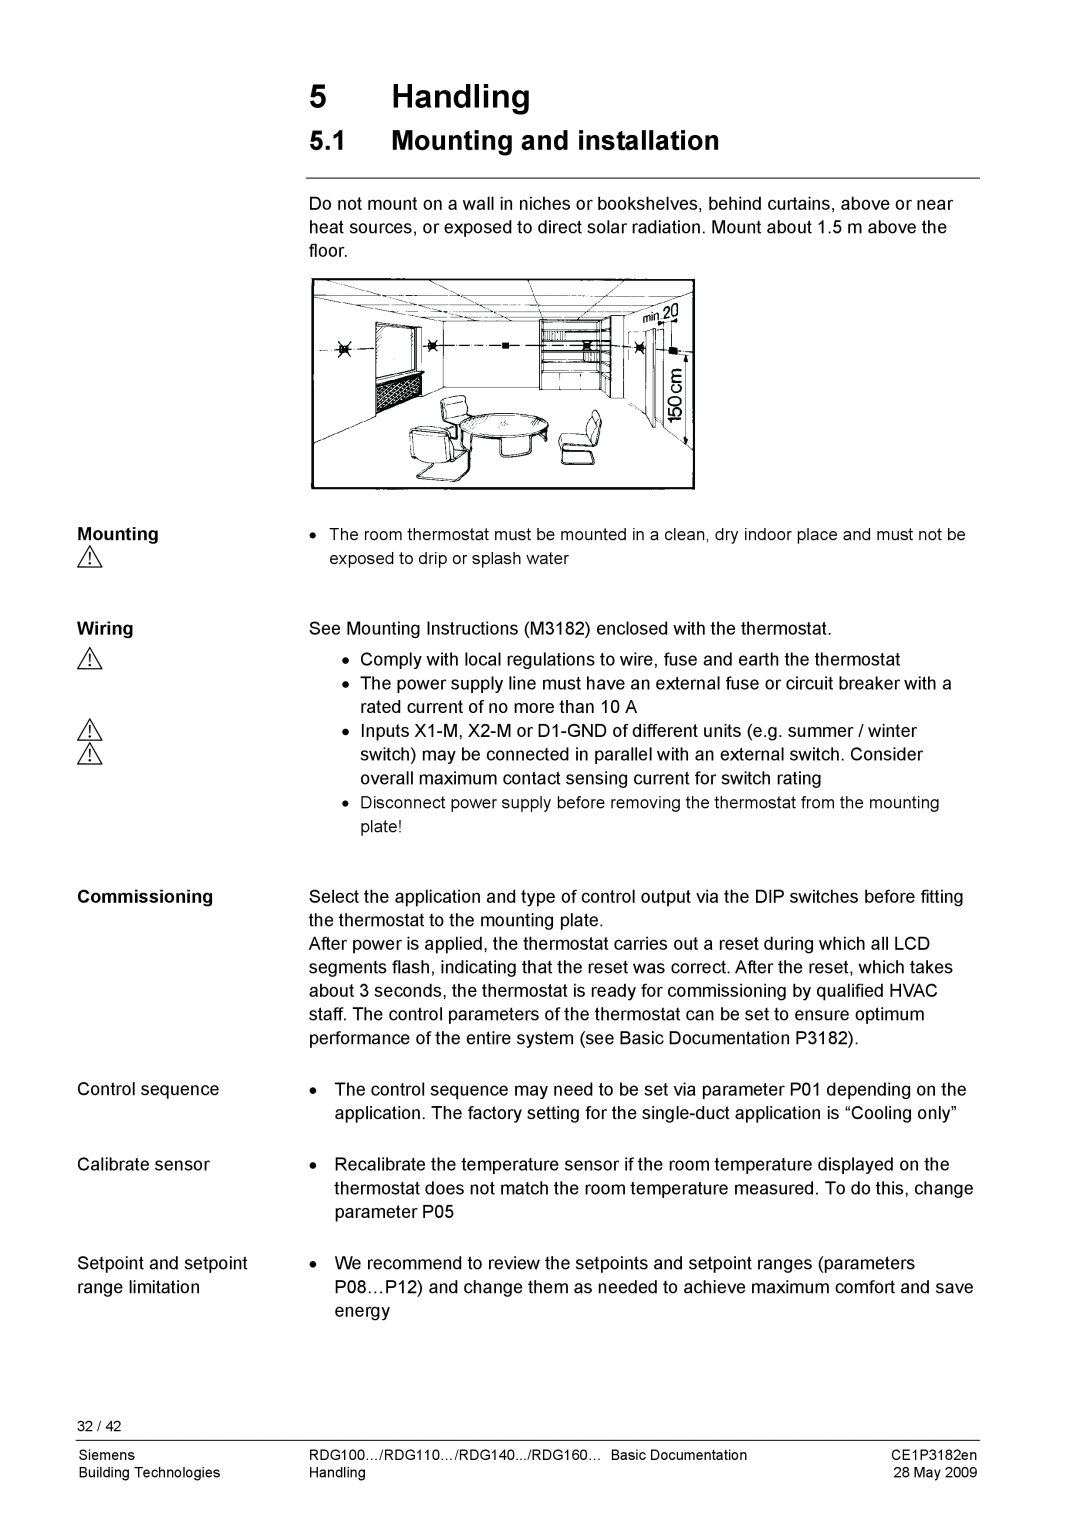 Siemens RDG400 manual Handling, 5.1Mounting and installation 